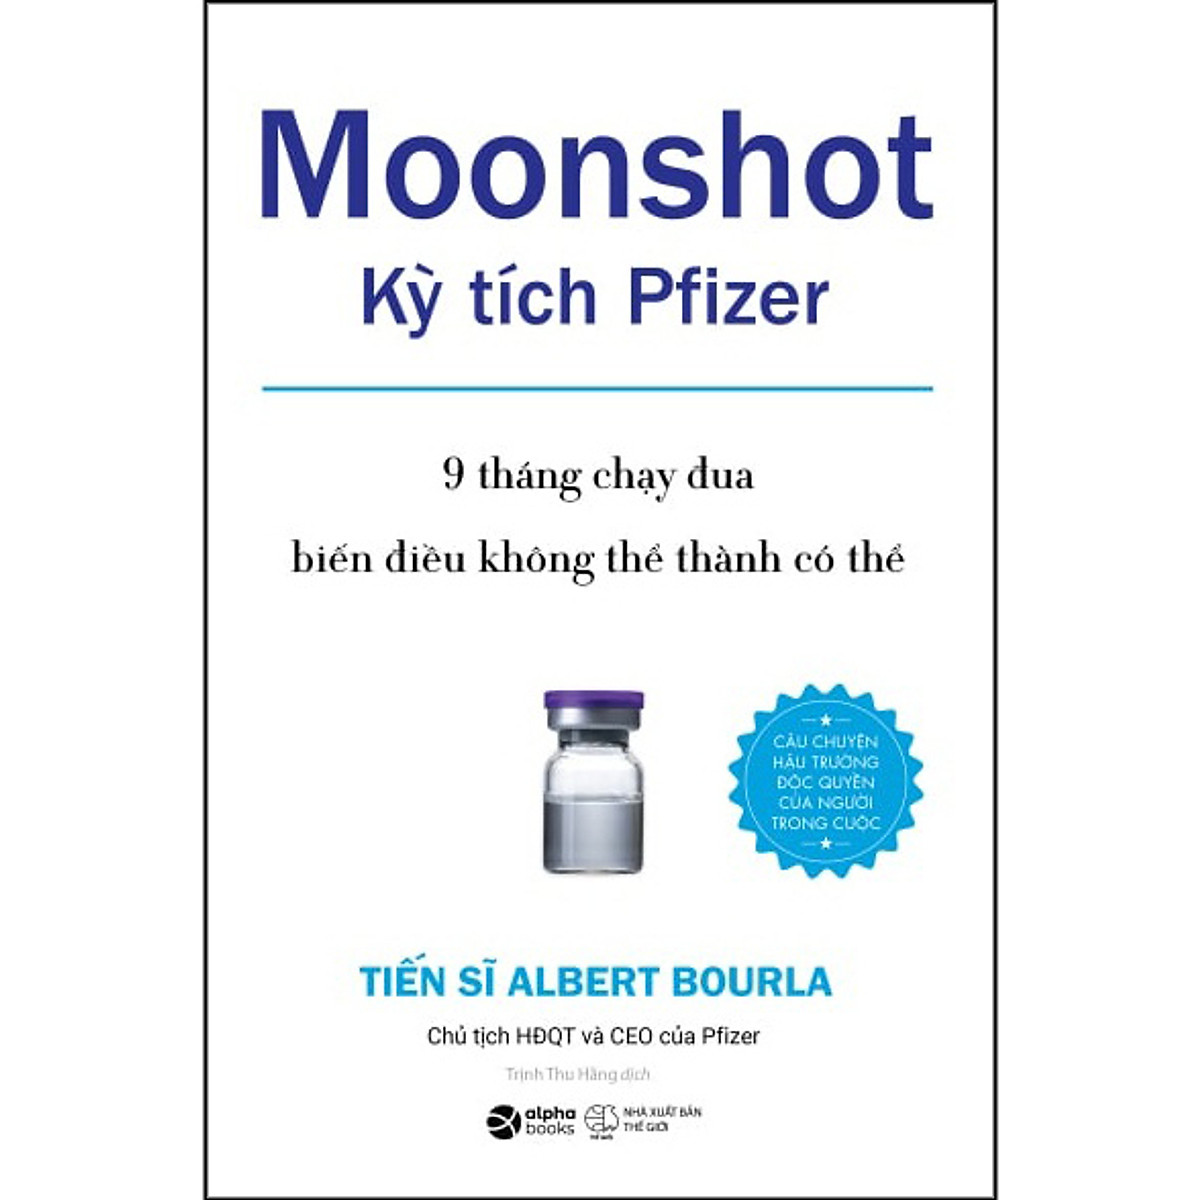 Moonshot: Kỳ tích Pfizer